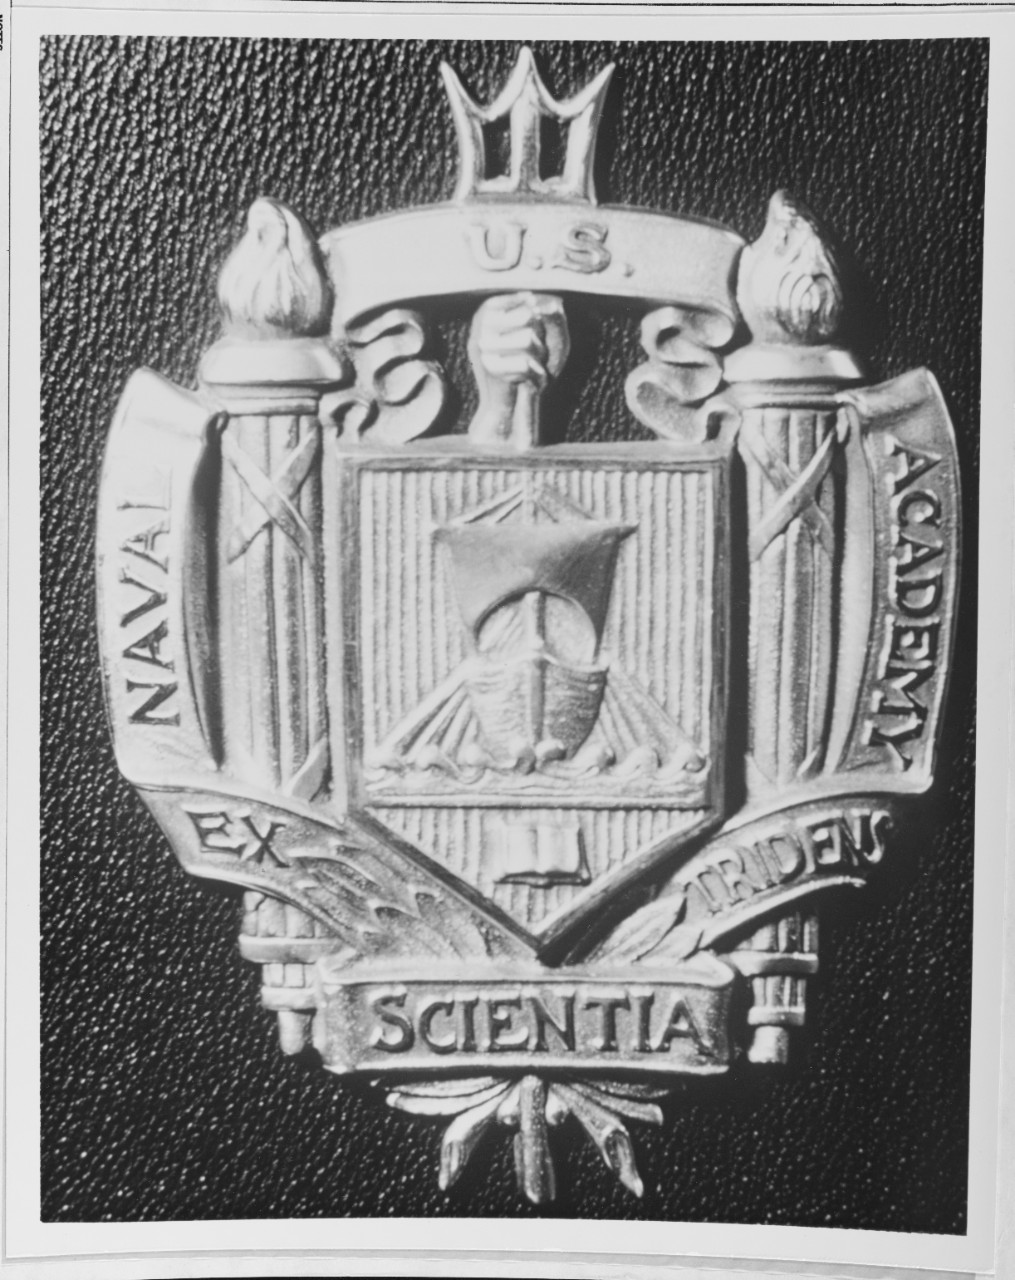 Insignia: U.S. Naval Academy, Annapolis